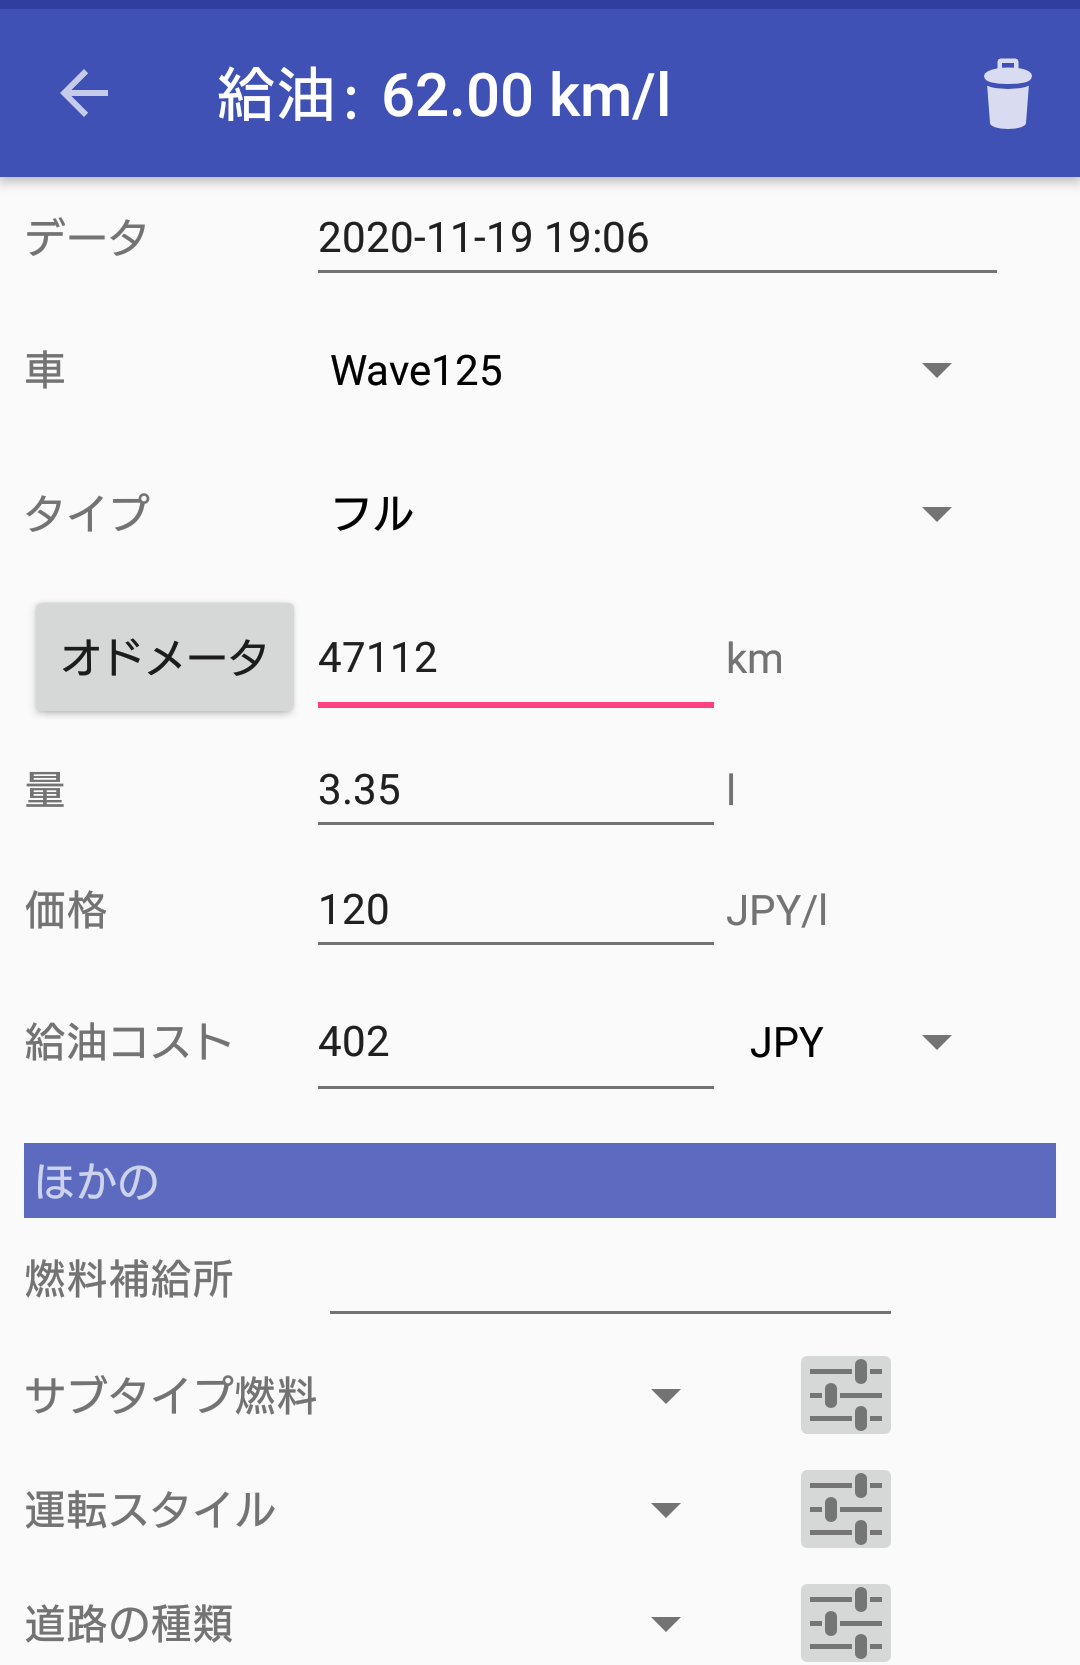 wave125の燃費